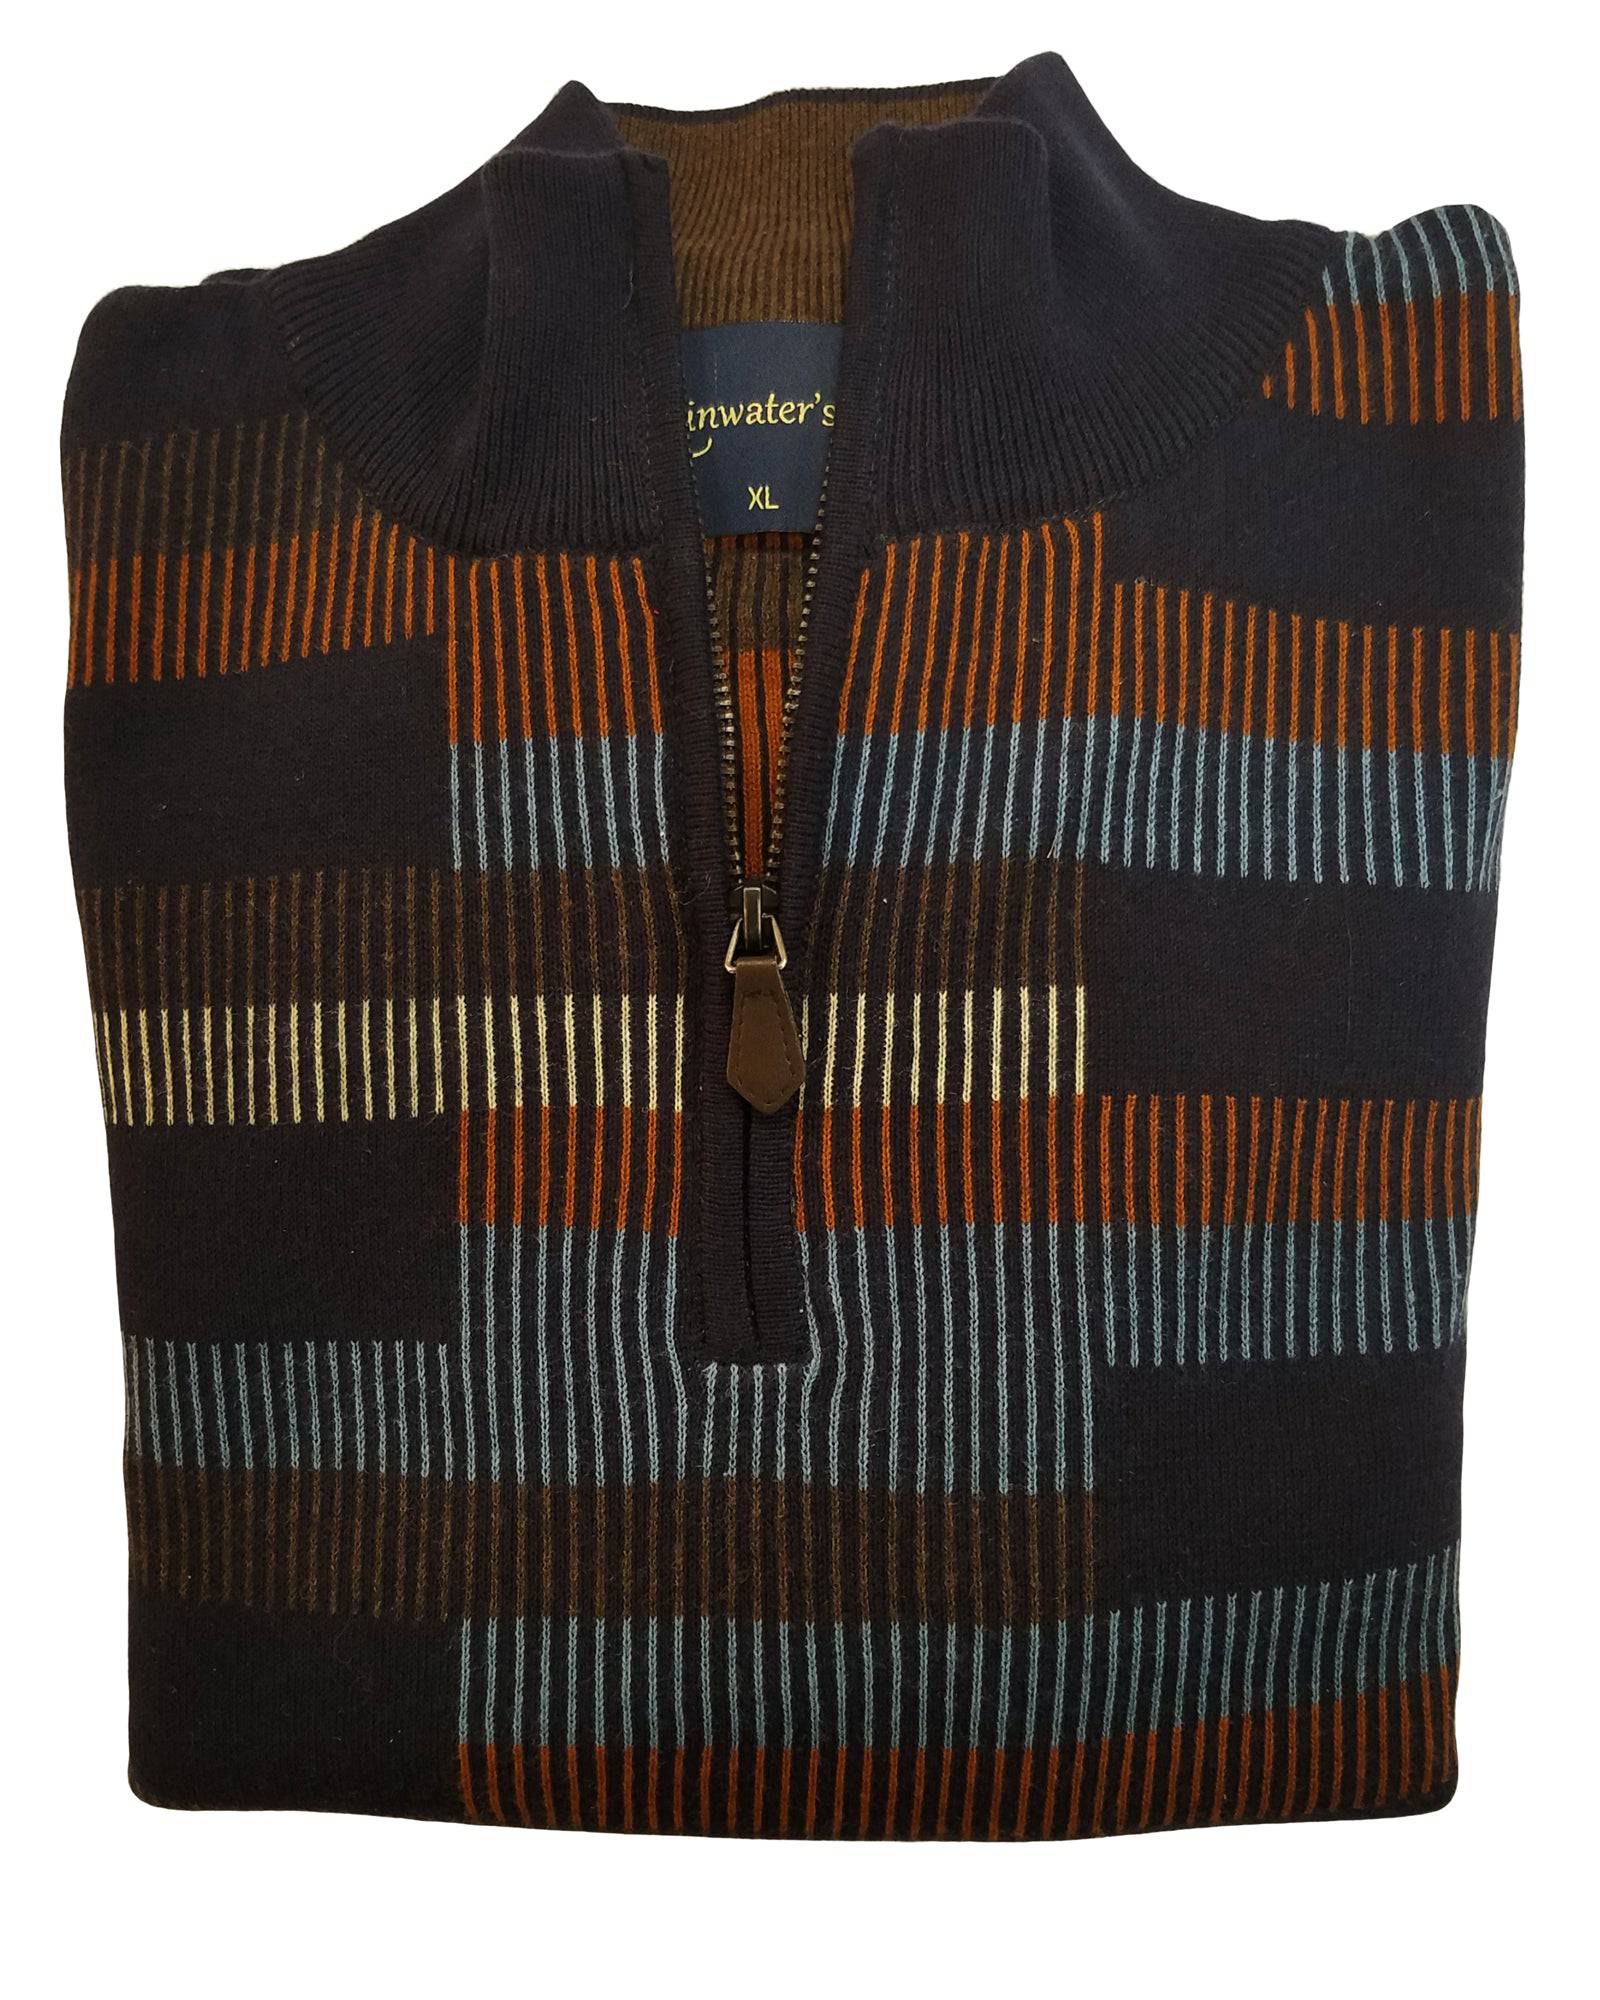 1/4 Zip Mock Sweater in Navy Geometric Design Cotton Blend - Rainwater's Men's Clothing and Tuxedo Rental